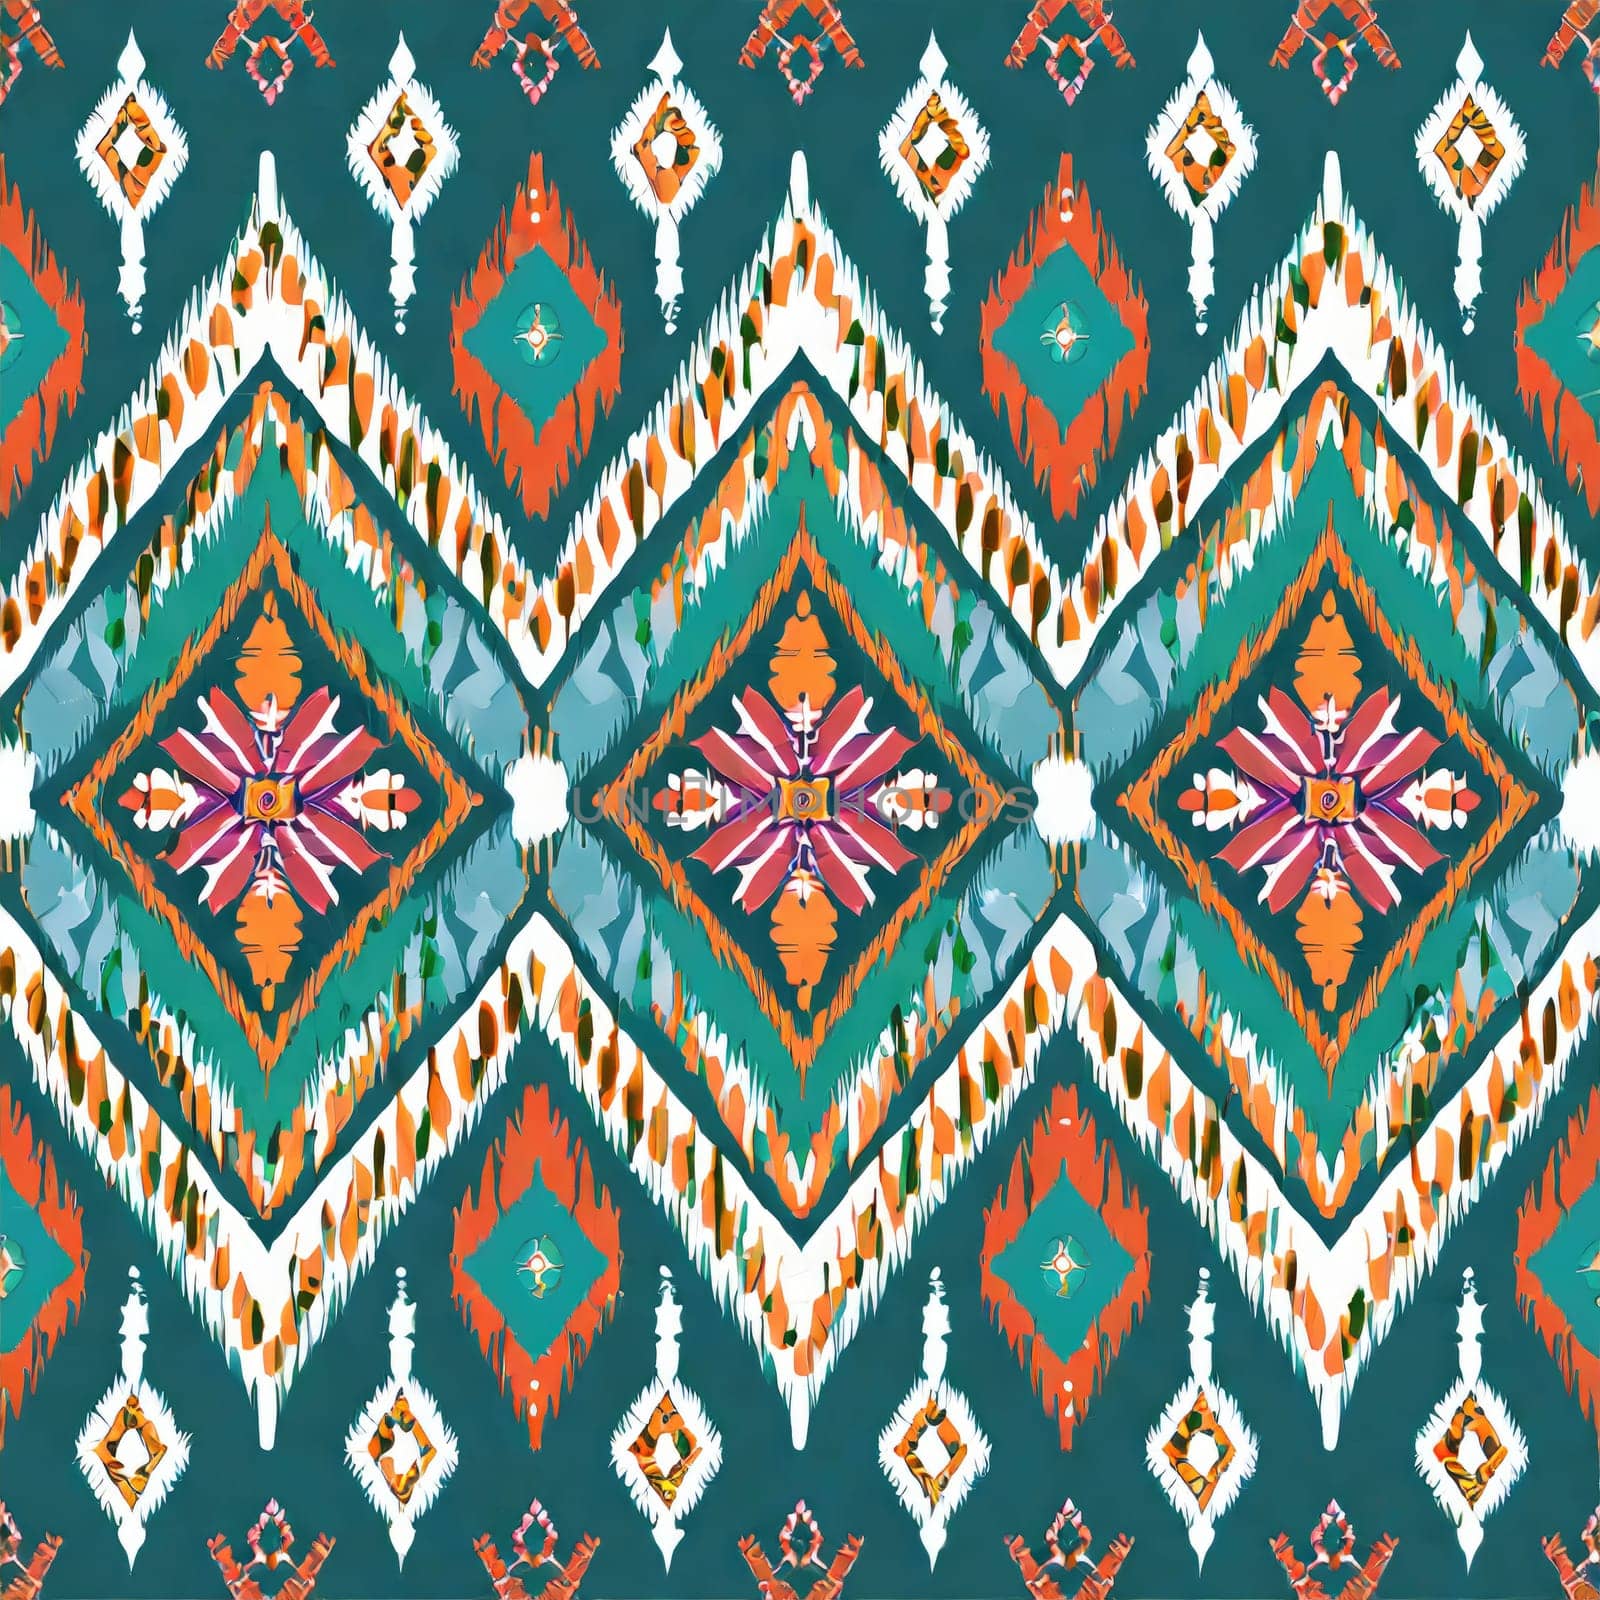 Digital seamless pattern etnic style block print by PeaceYAY